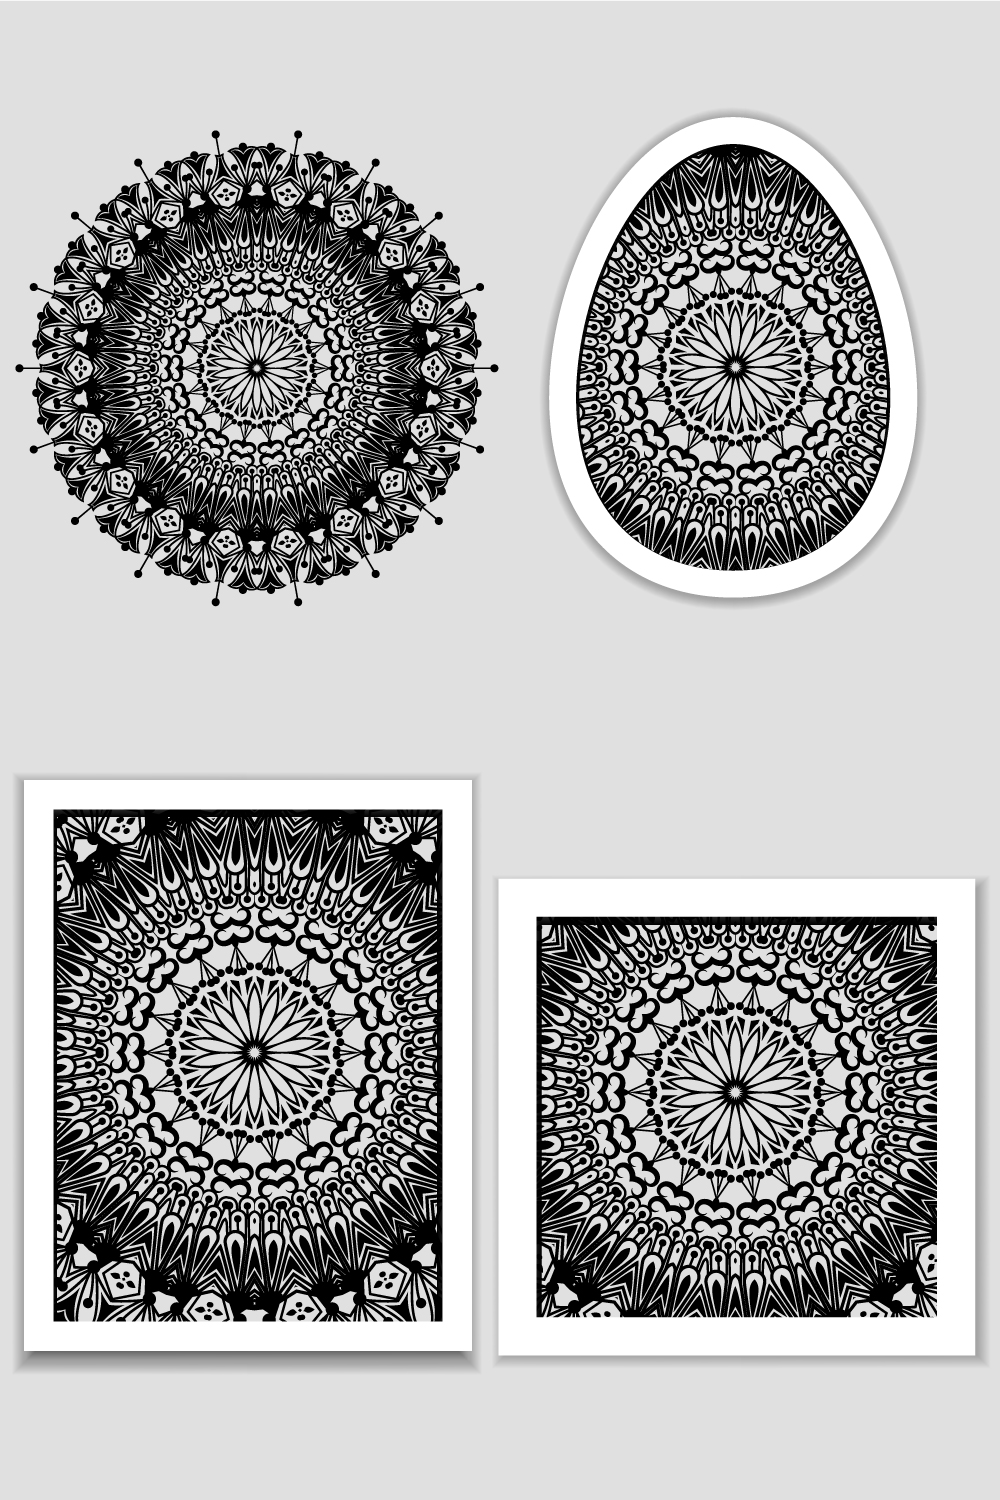 Mandala Background. Vintage Decorative Elements - Pinterest.